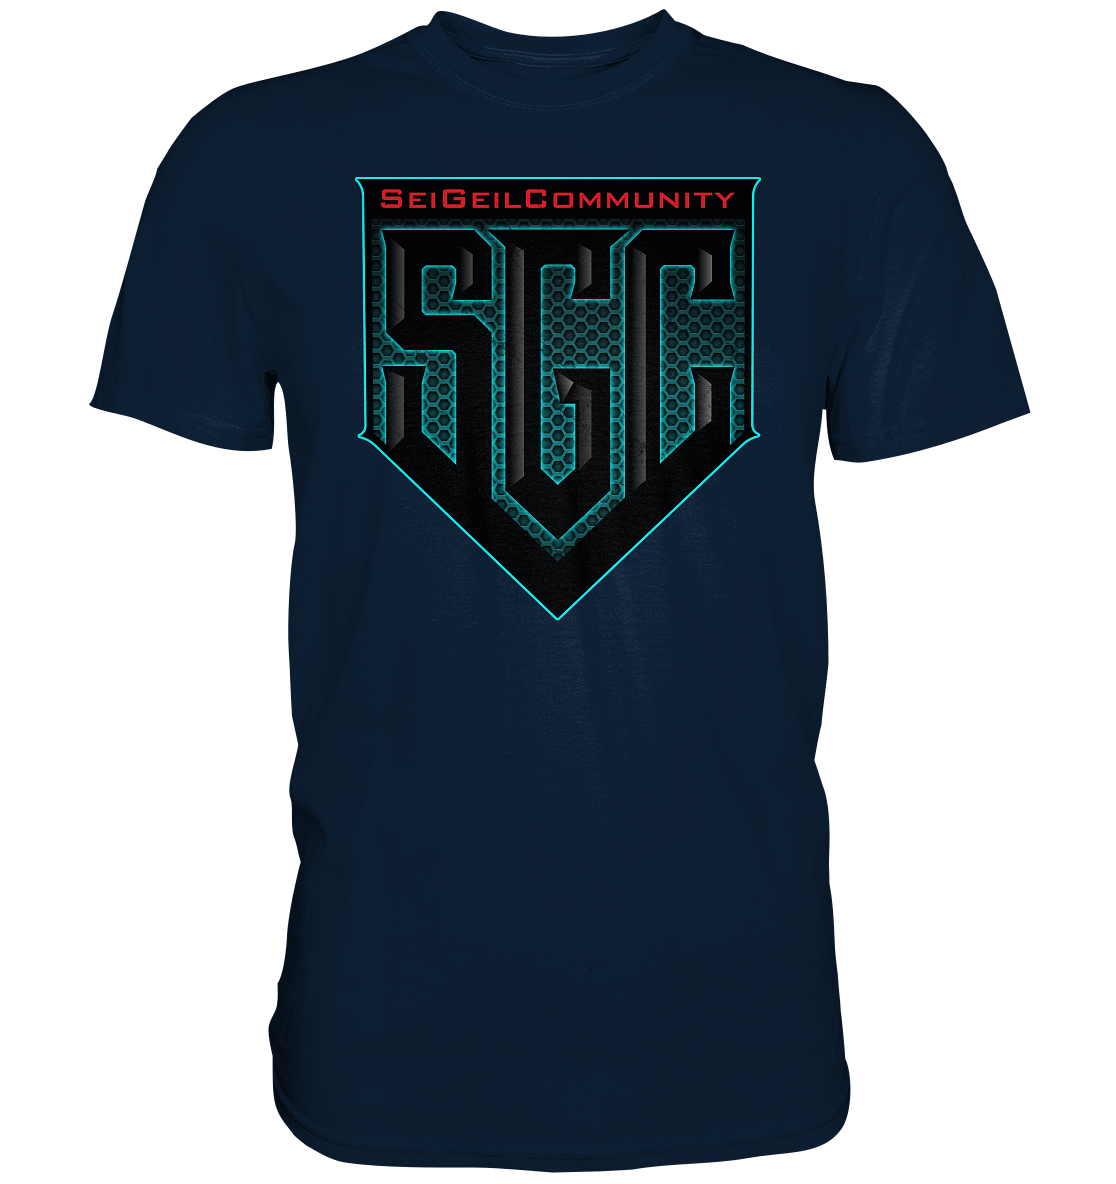 SEI GEIL COMMUNITY - Basic Shirt